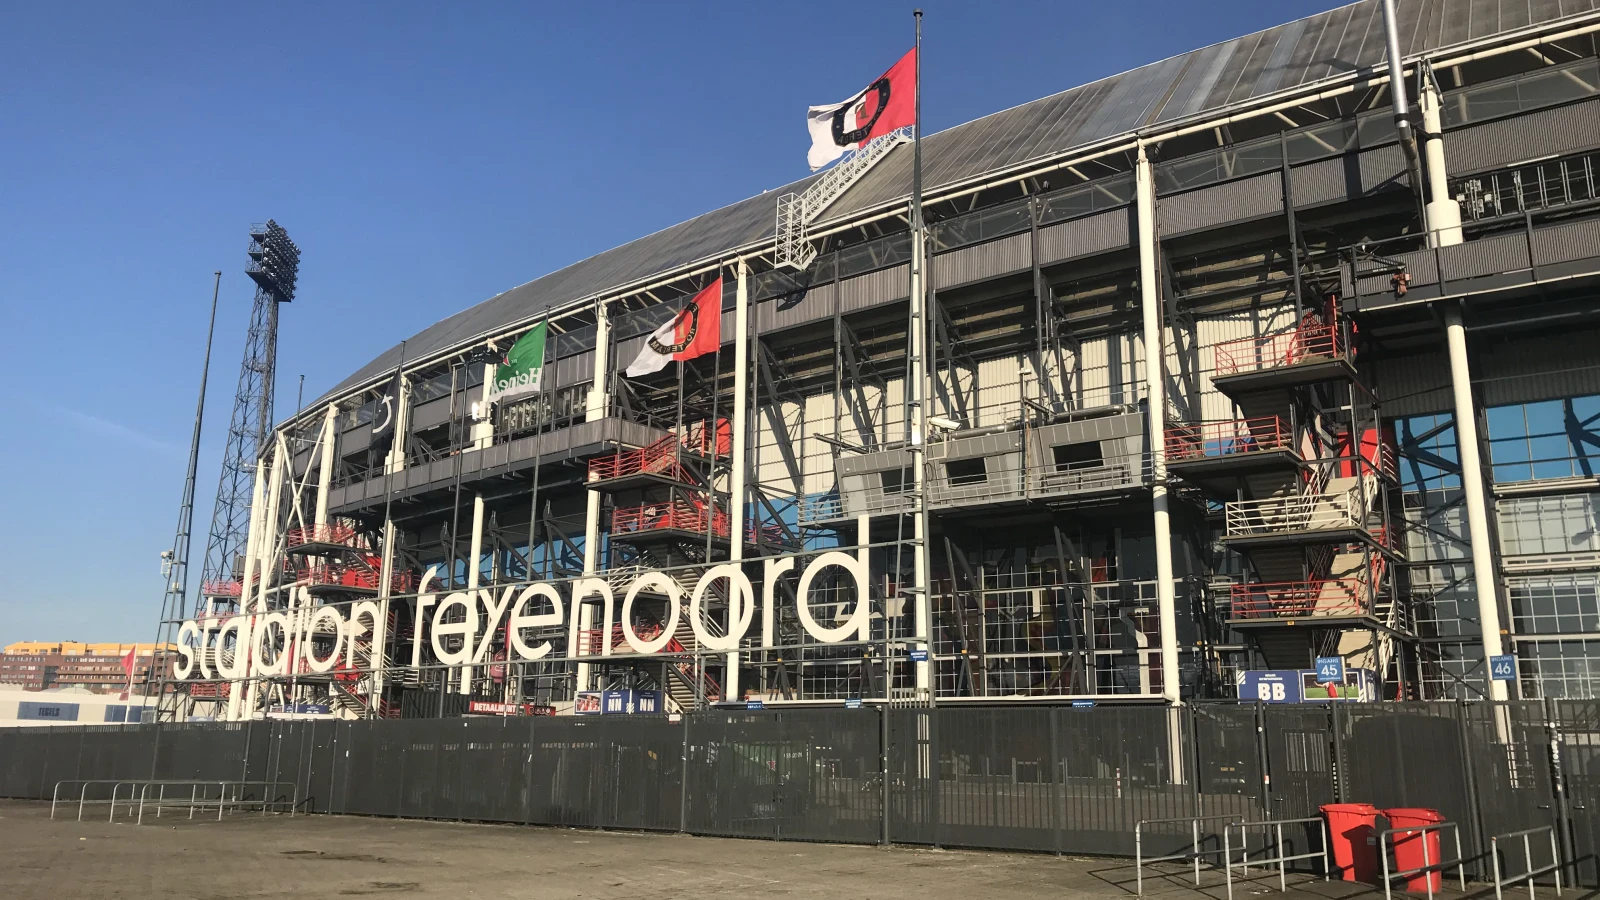 Feyenoord gaat samenwerken met SciSports